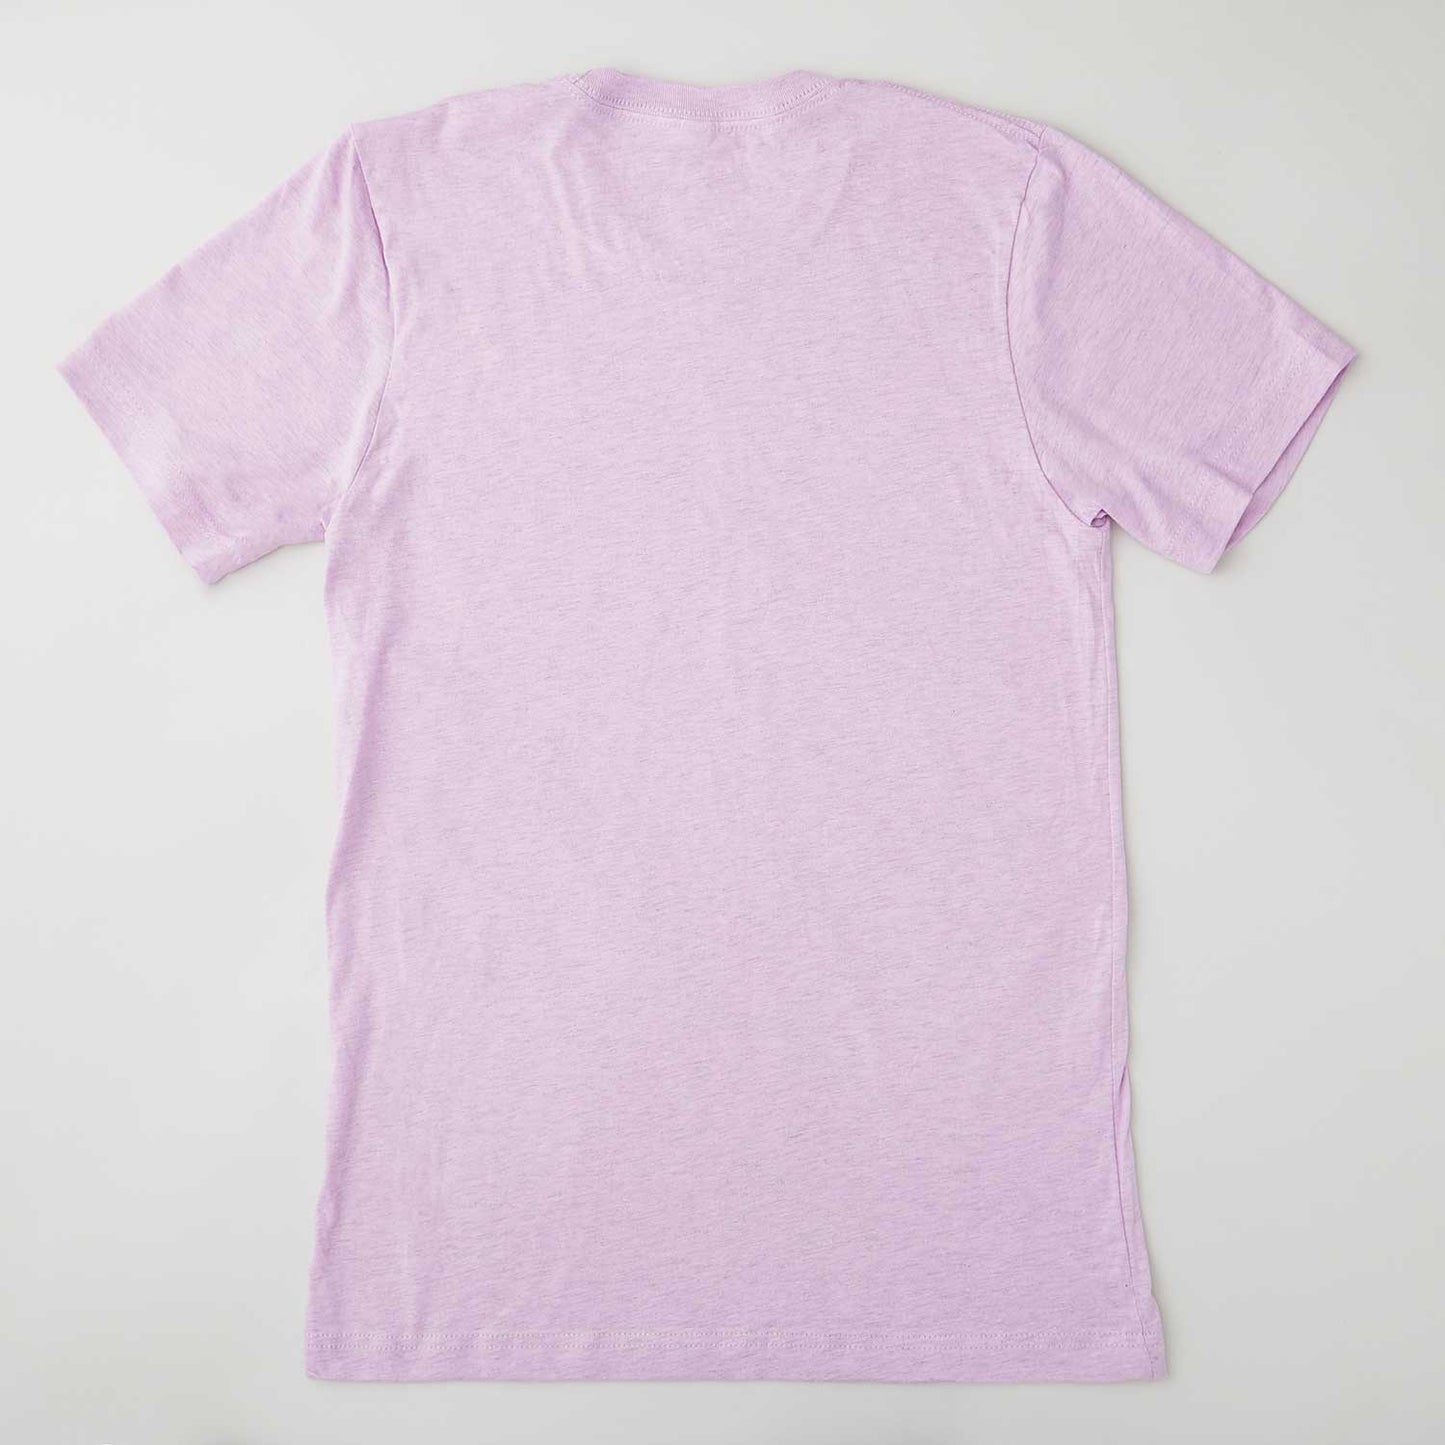 Quiltmaker T-shirt - Heather Prism Lilac - 3XL Alternative View #1